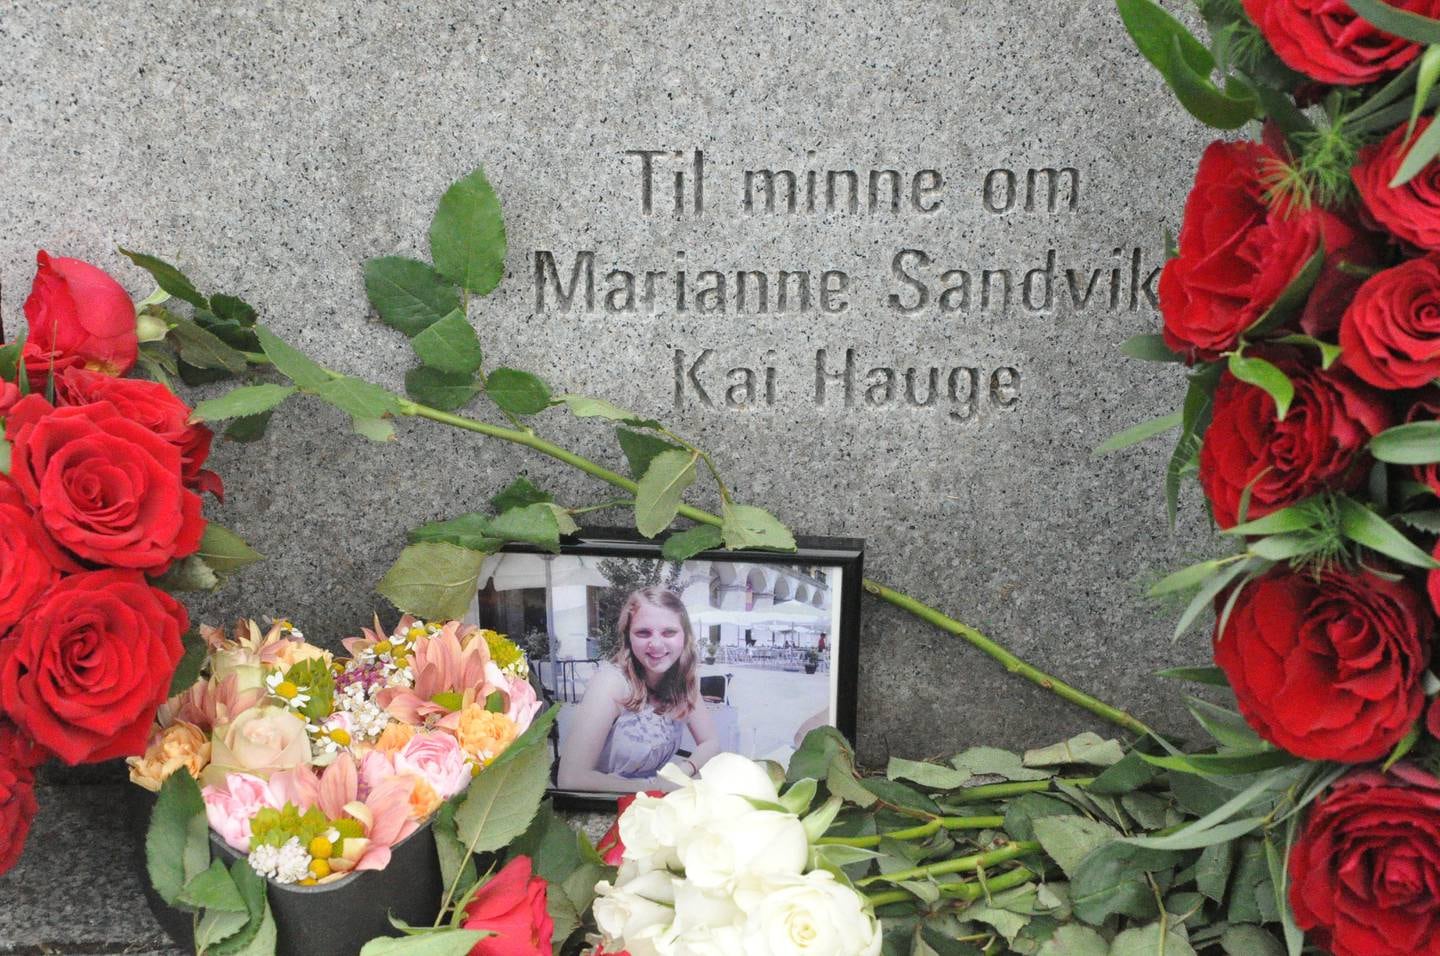 En stein hvor det står "Til minne om Marianne Sandvik, Kai Hauge".